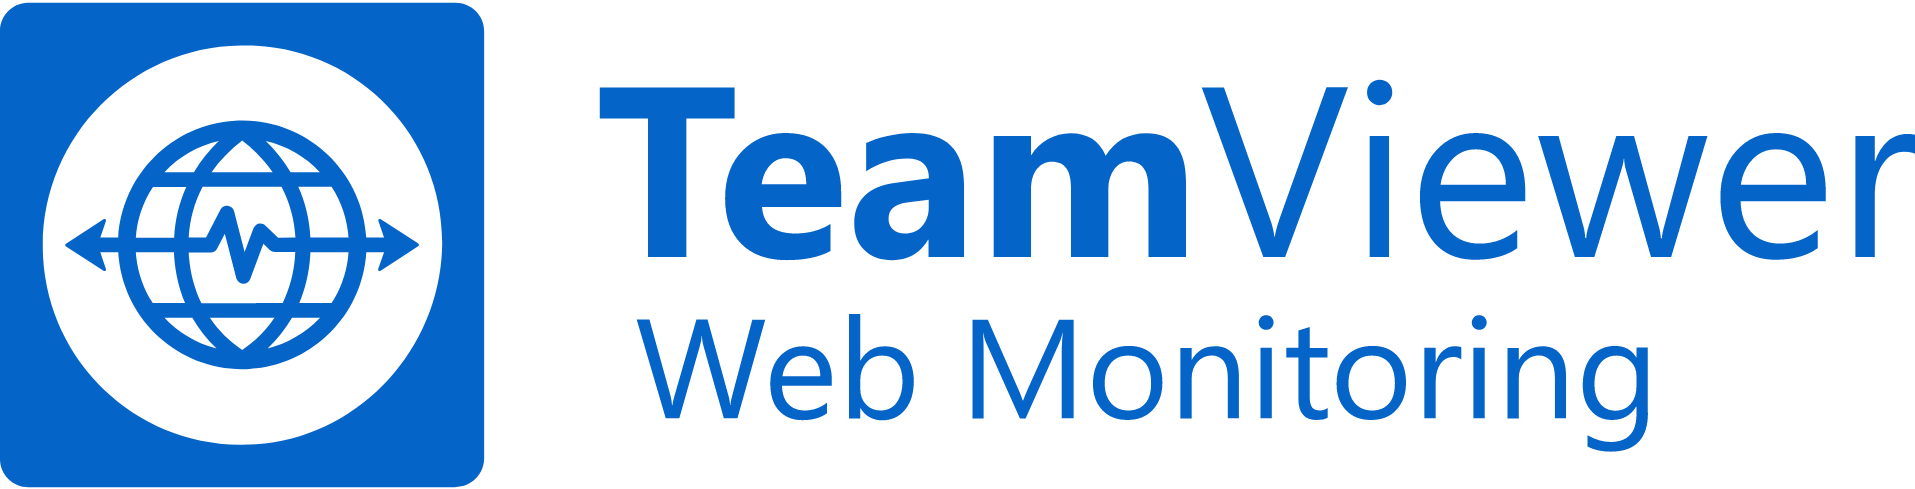 TeamViewer Мониторинг и Управление ресурсами